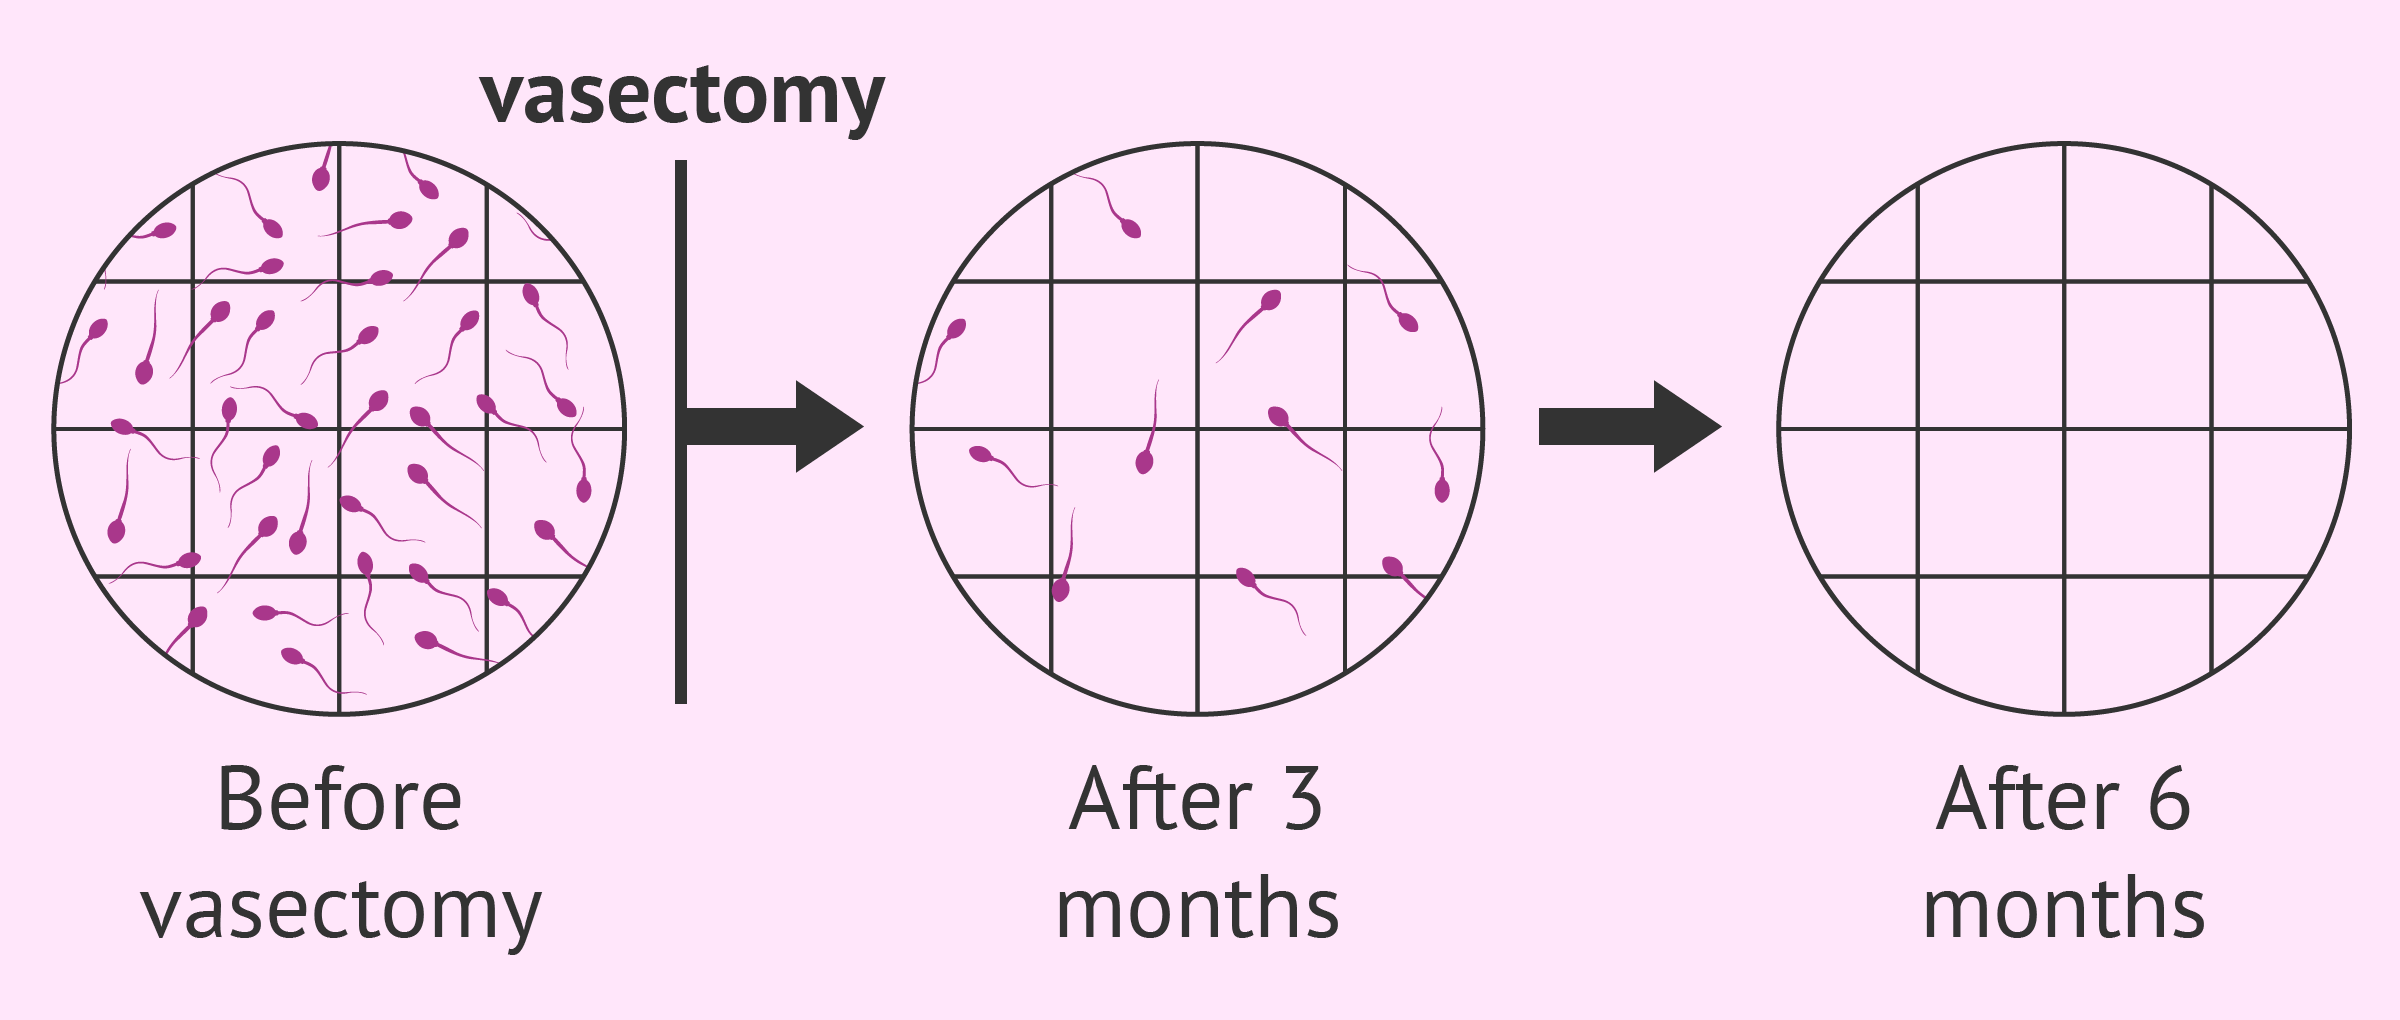 Post vasectomy sperm counts